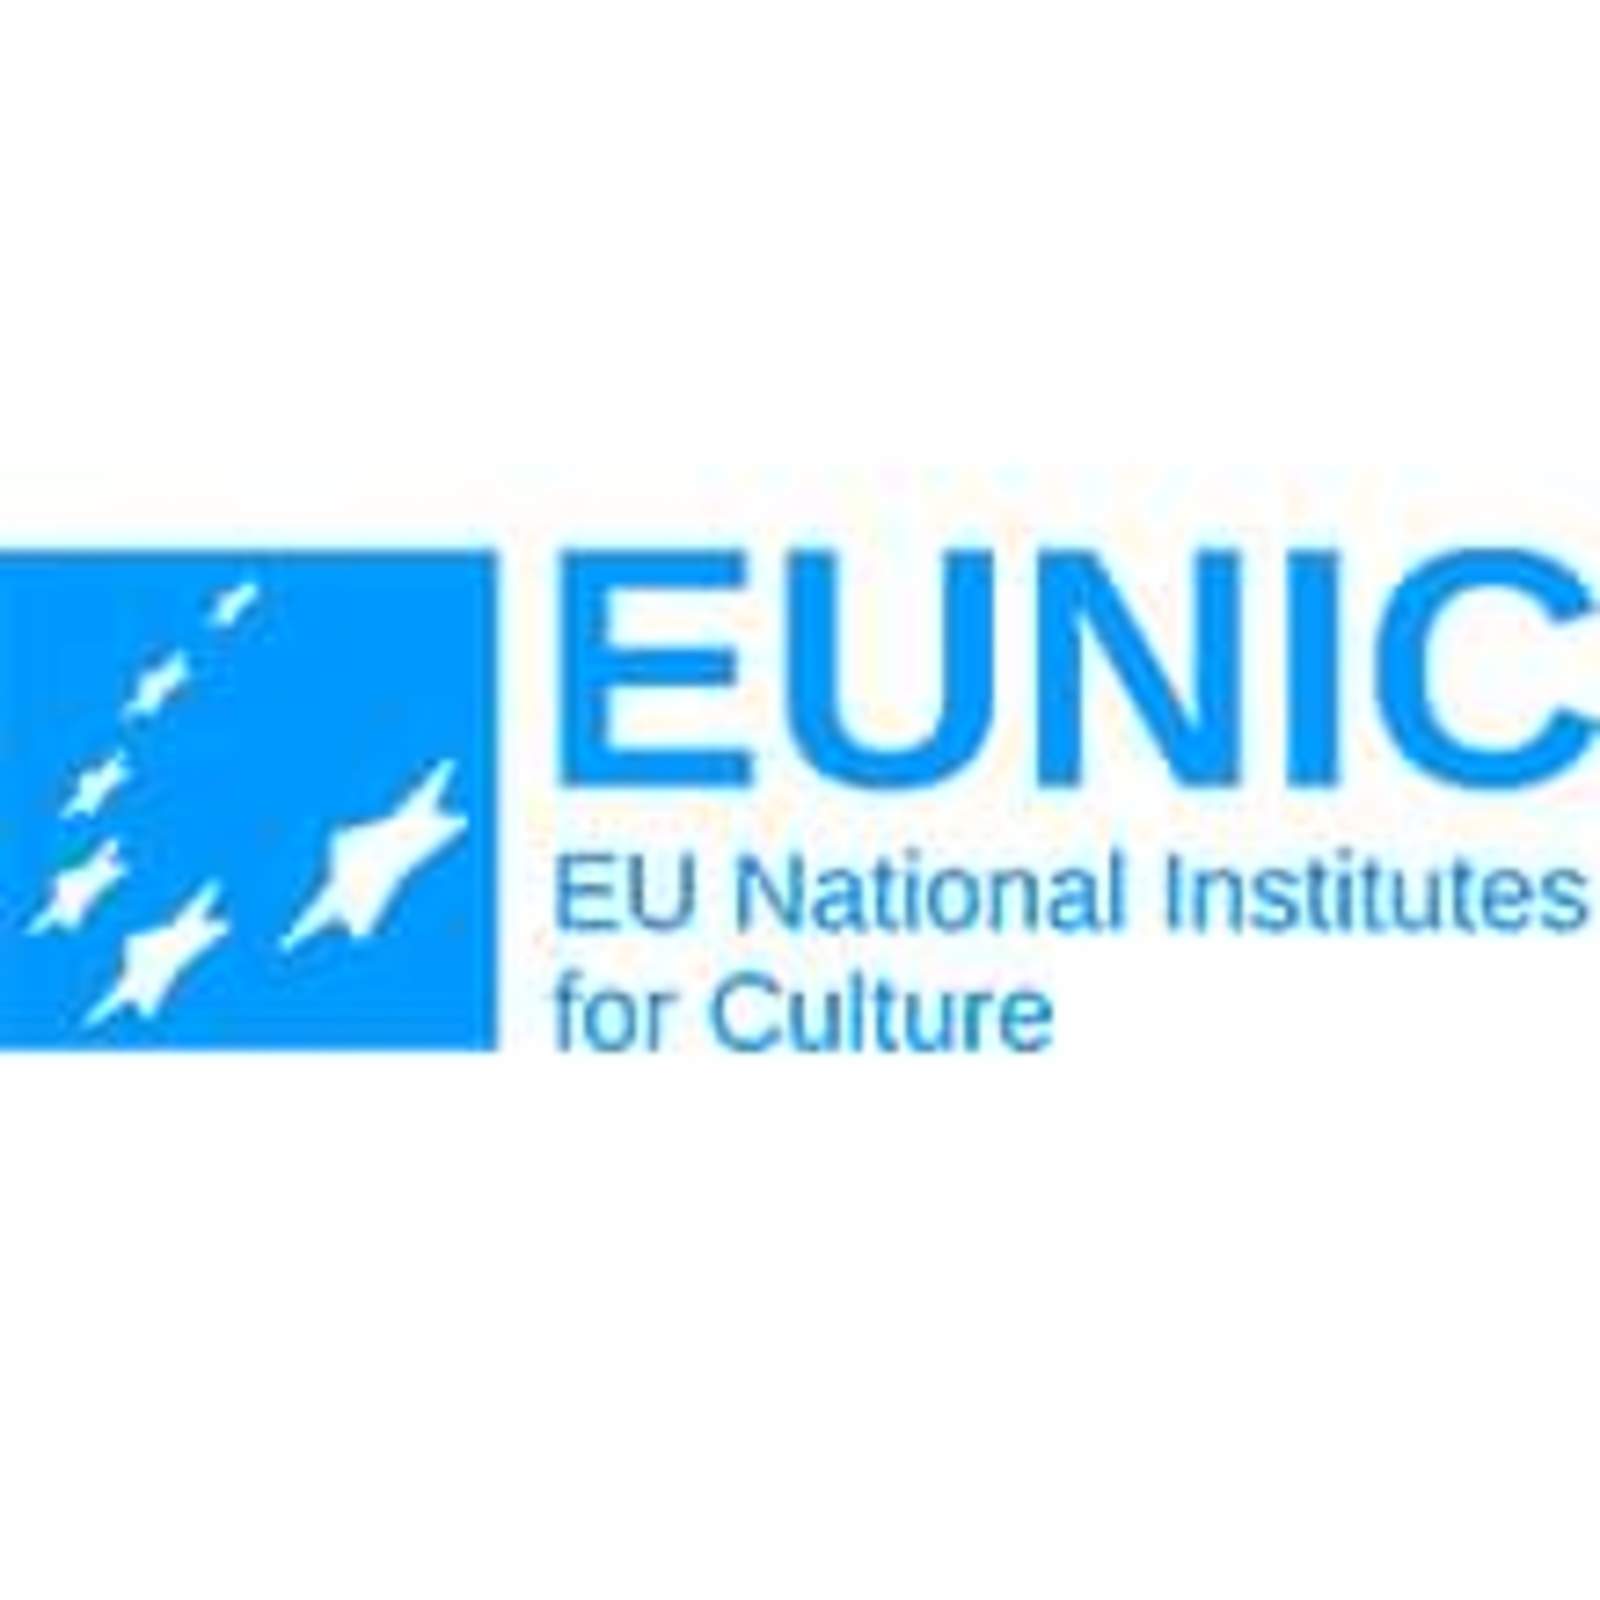 EUNIC (European Union National Institutes for Culture)